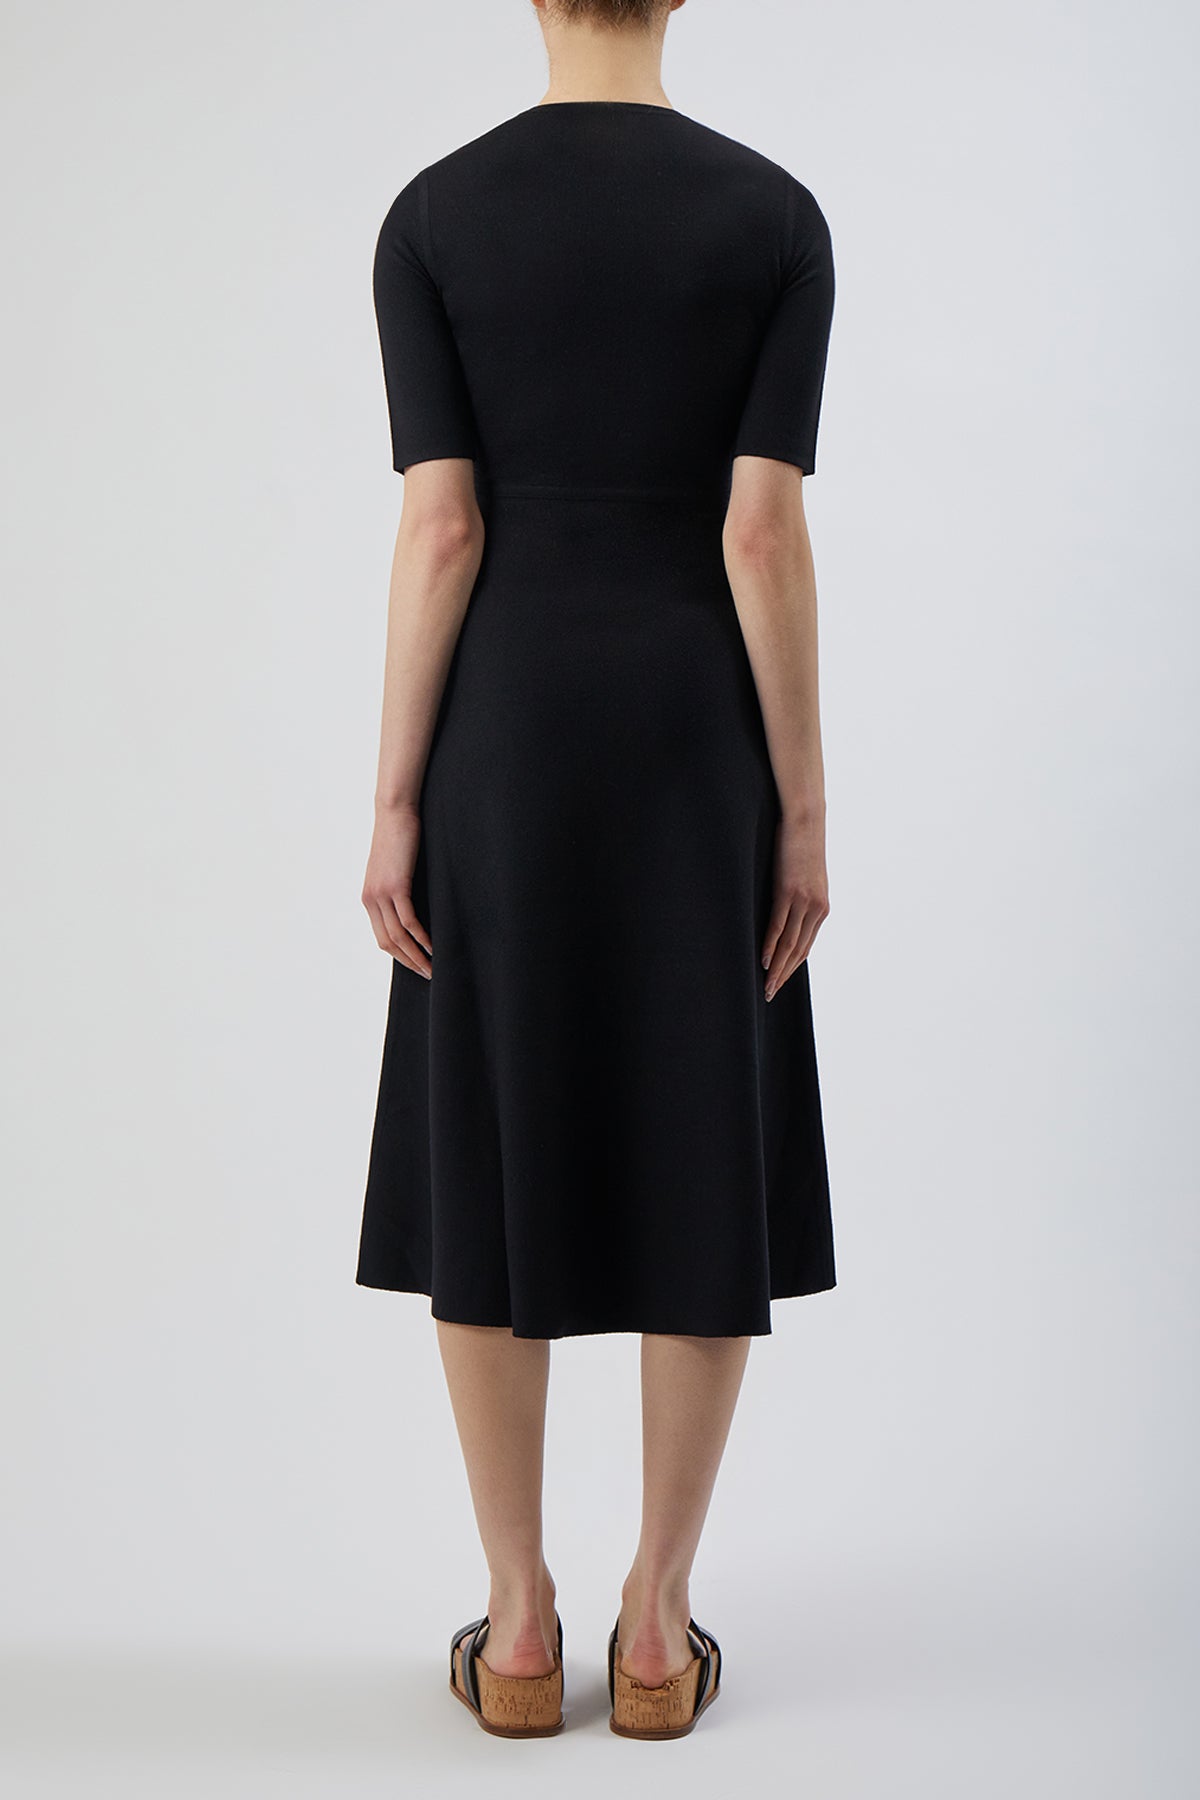 Seymore Knit Dress in Black Merino Wool Cashmere